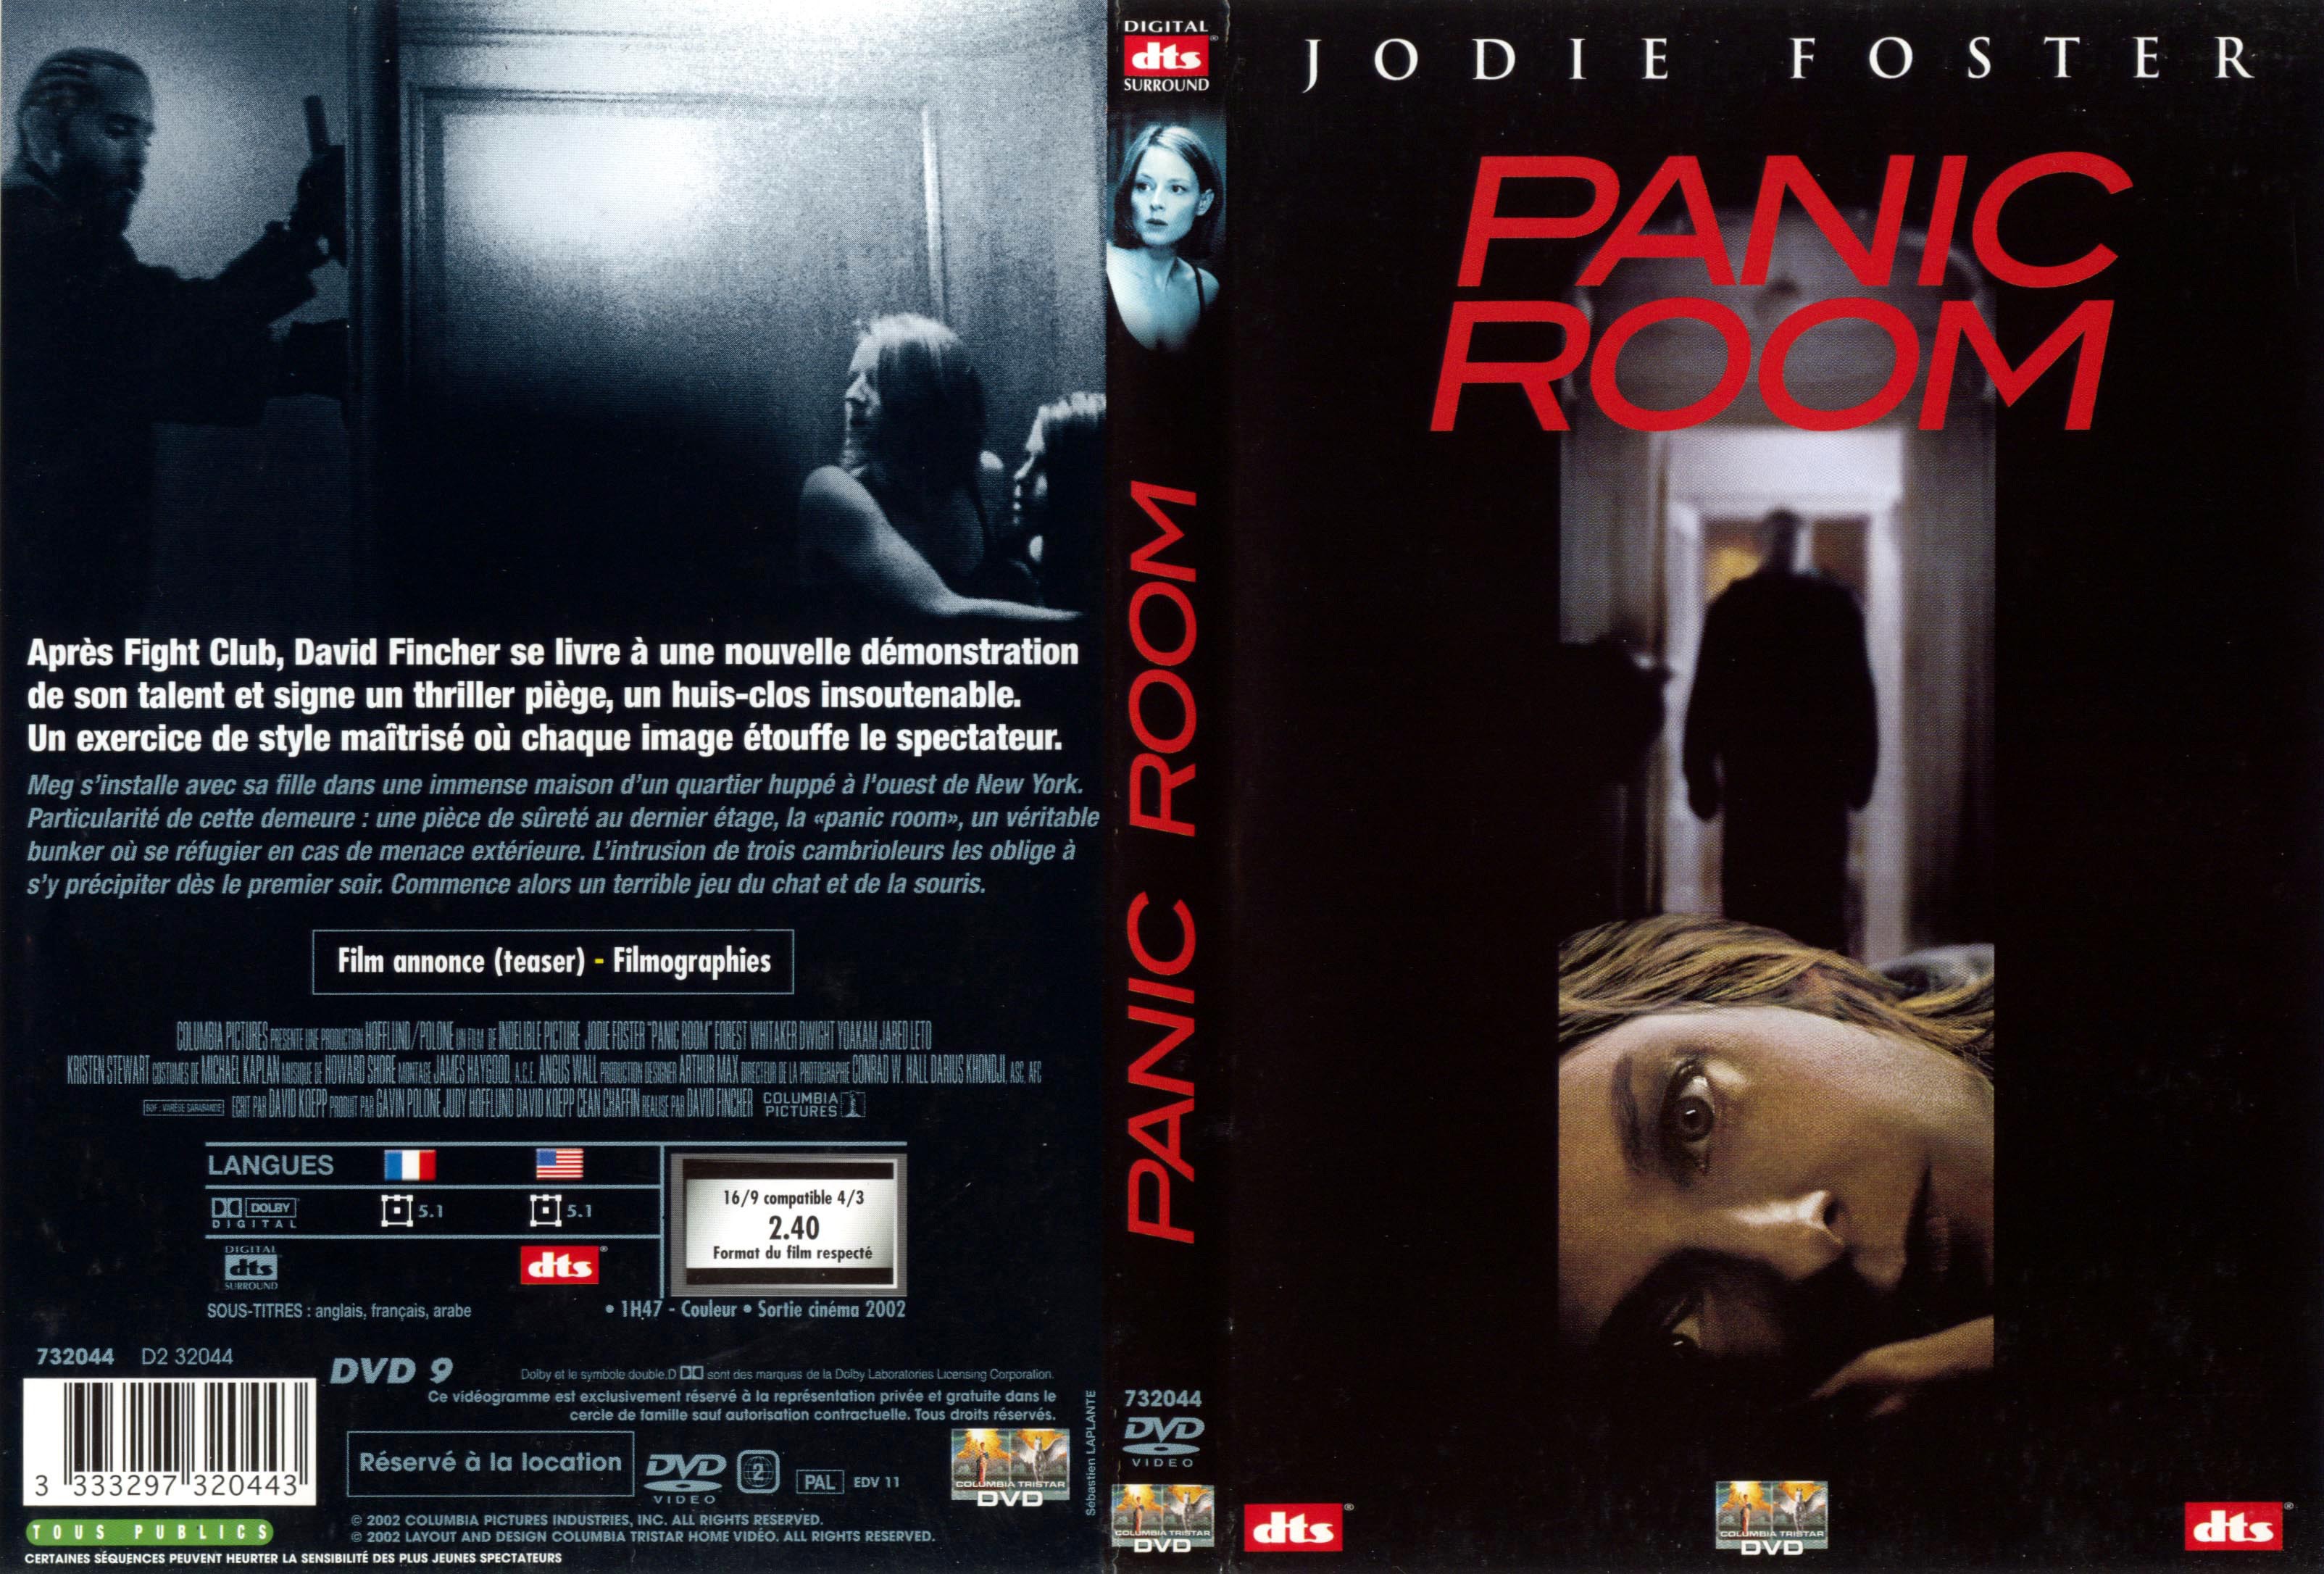 Jaquette DVD Panic room